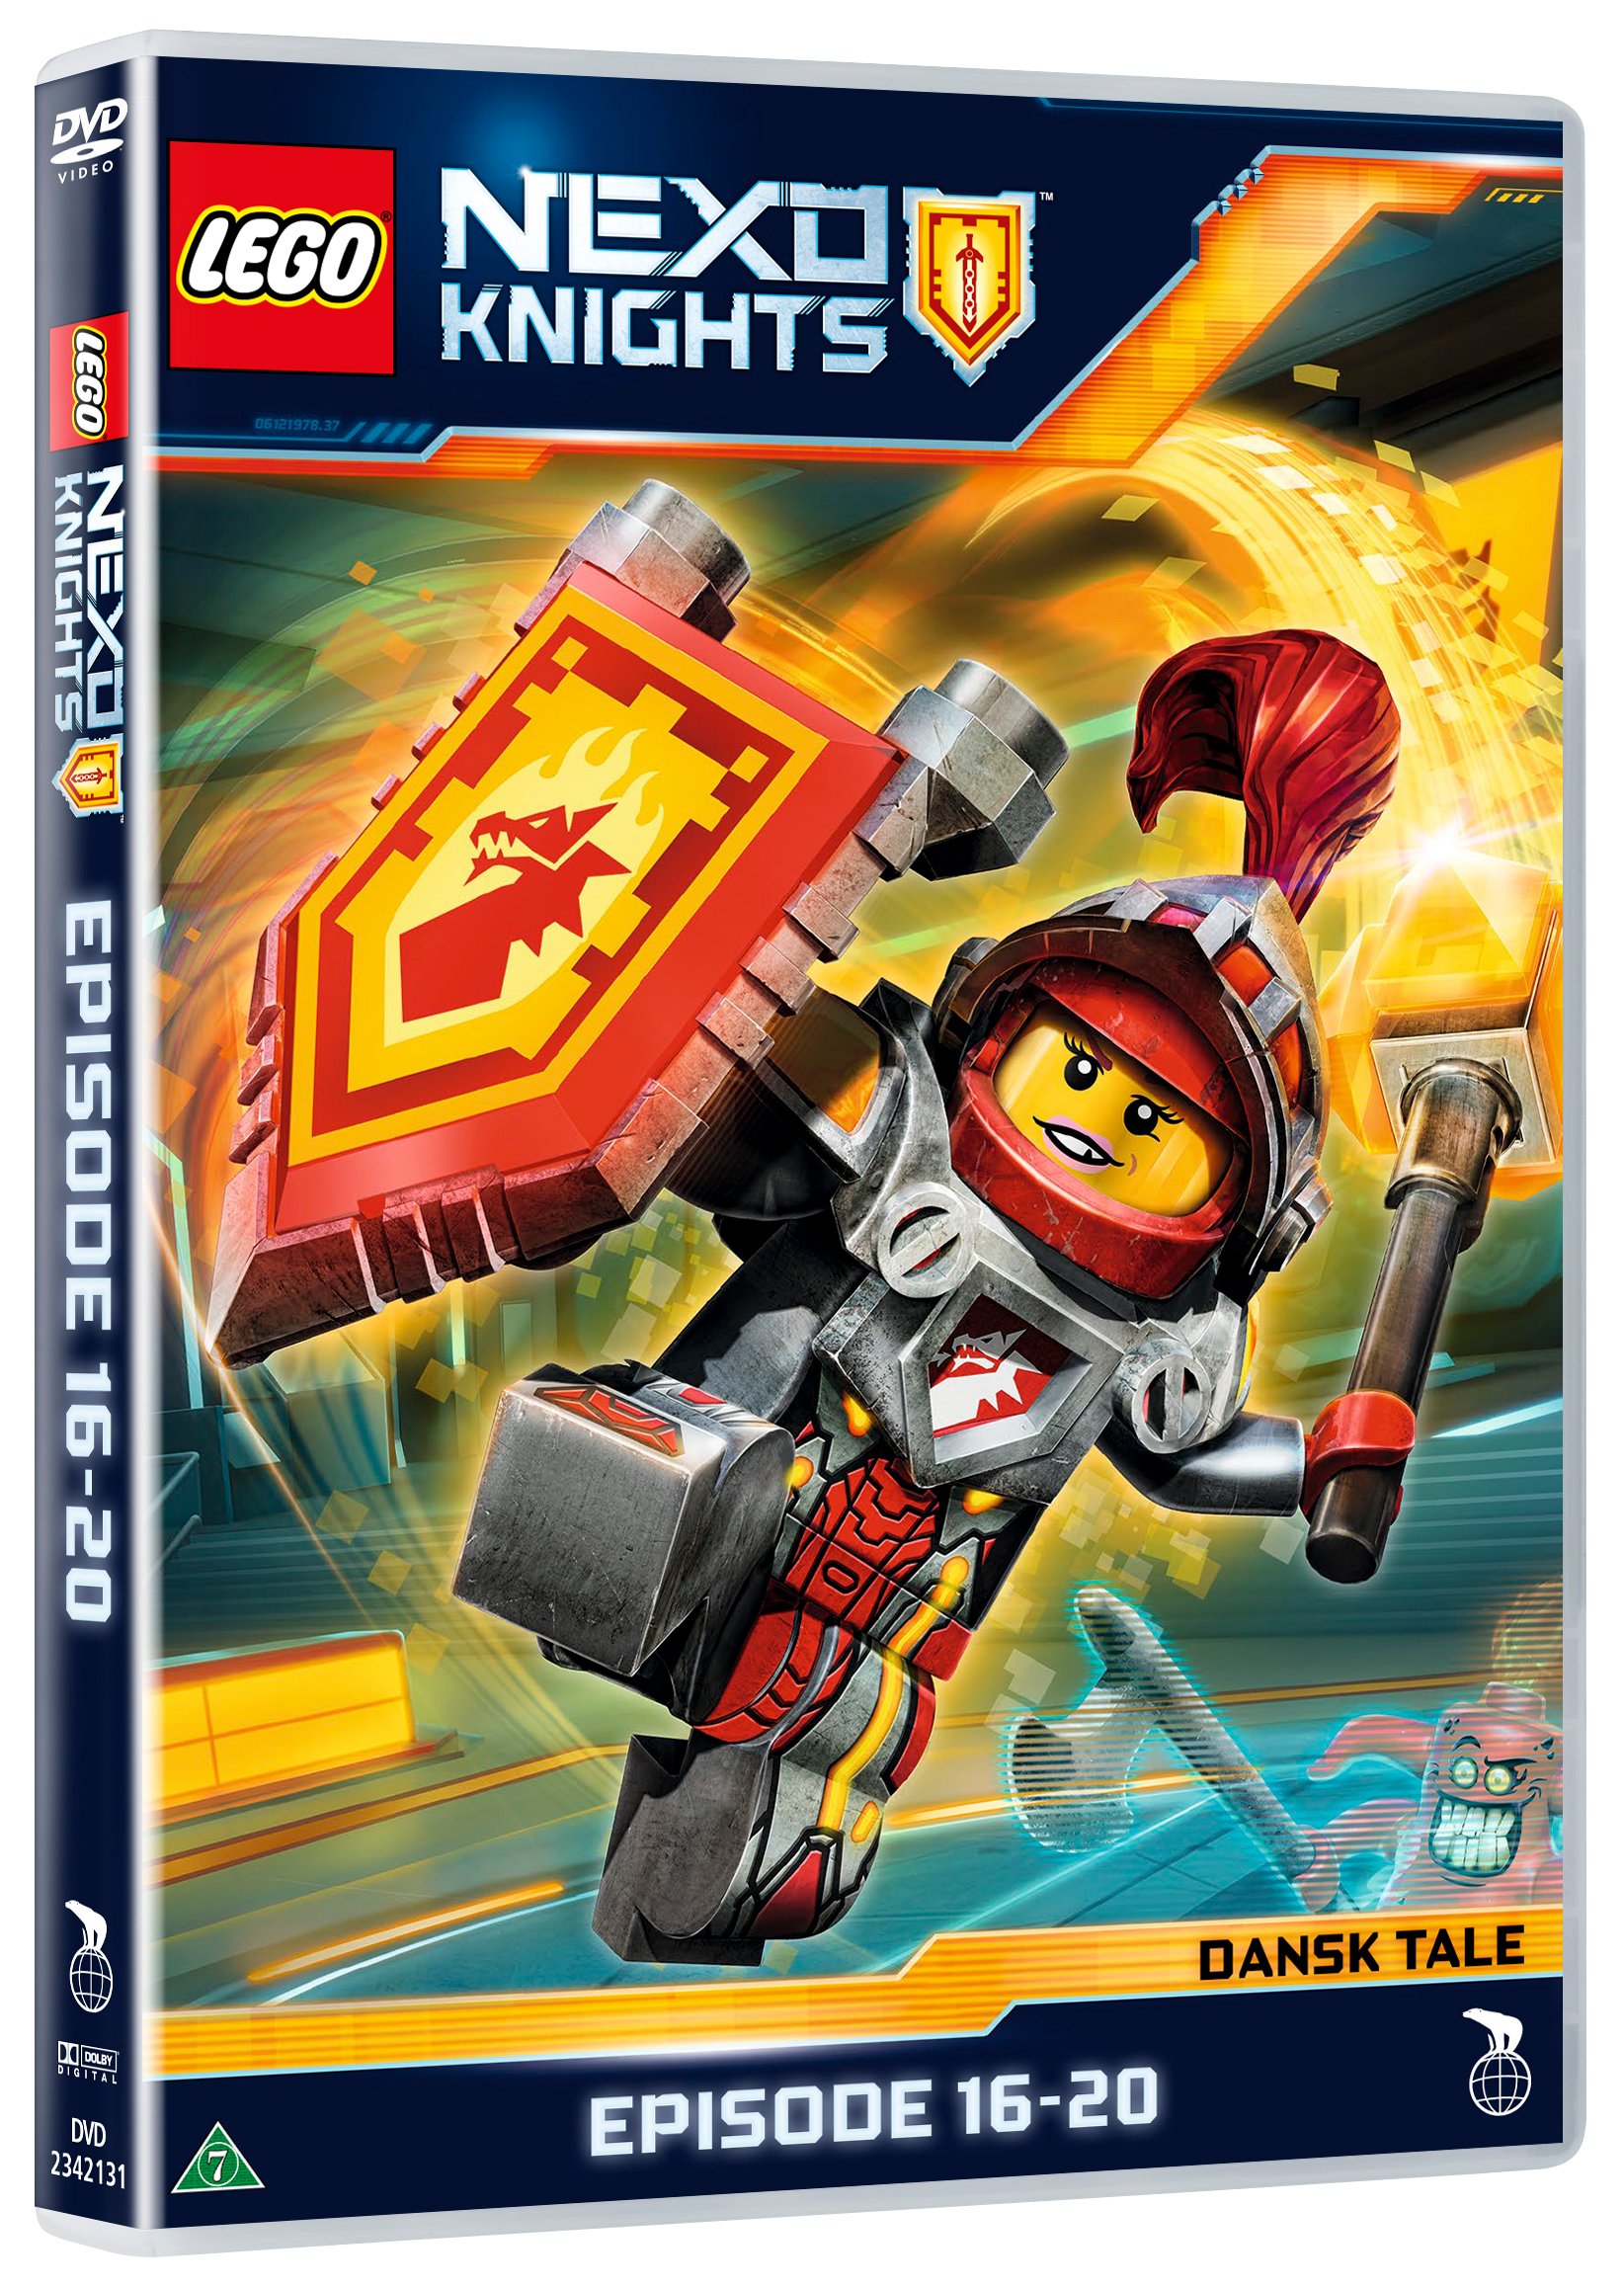 resultat stål Intim Køb LEGO - Nexo Knights - serie 2 - episode 16-20 - DVD